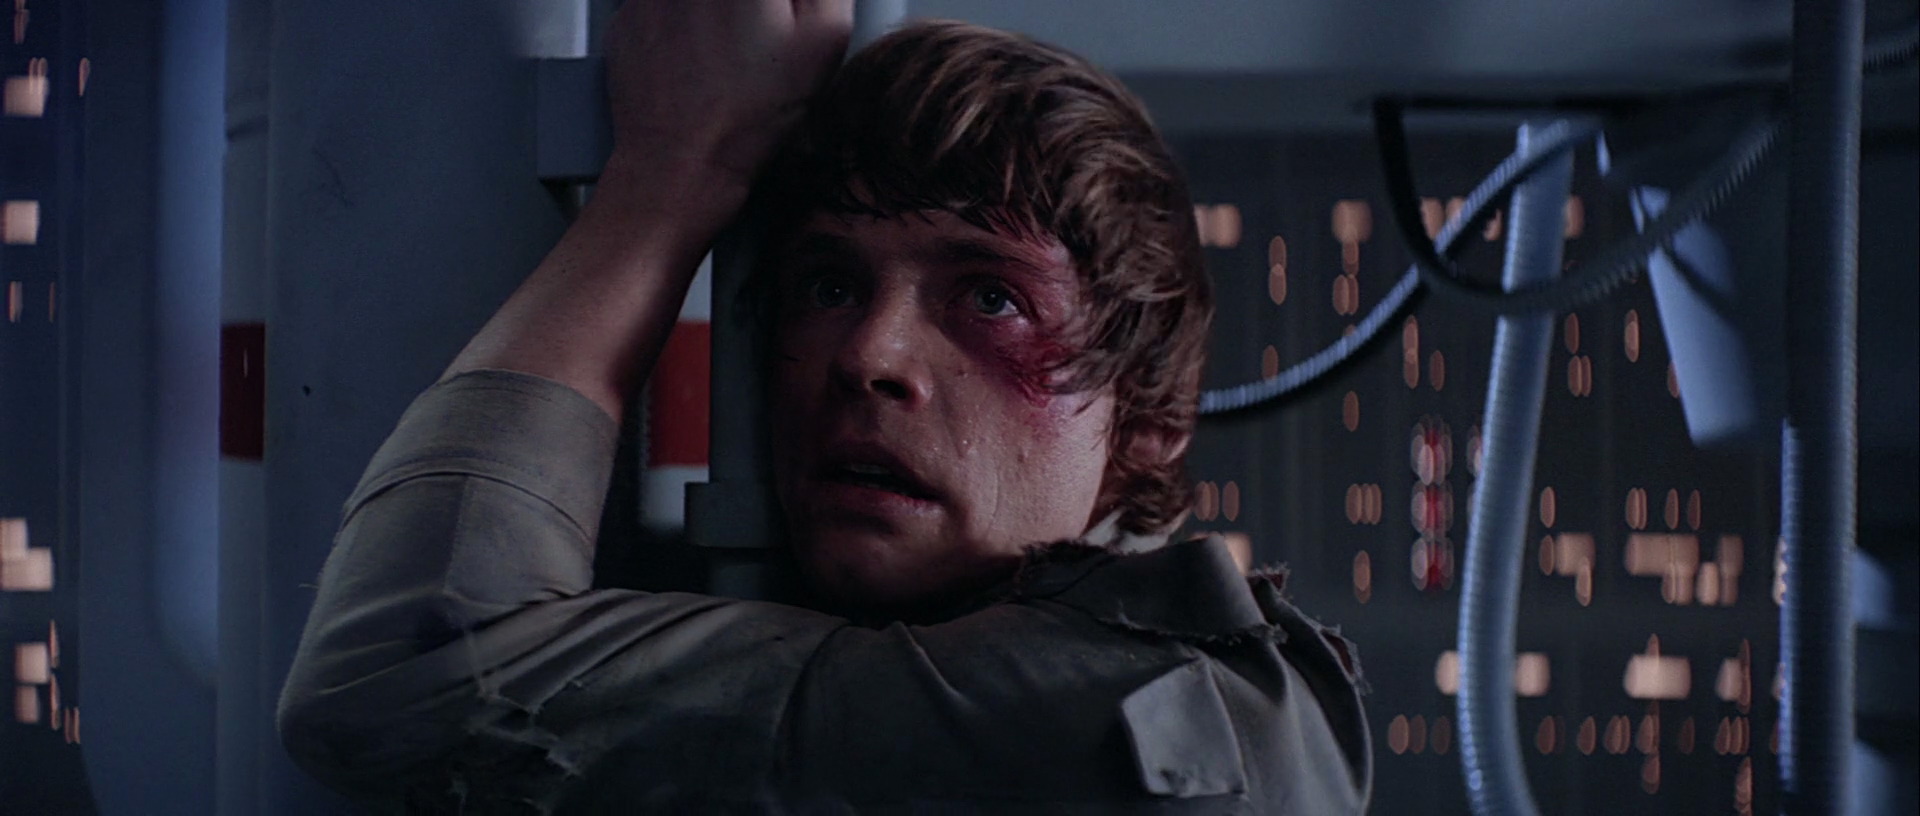 Luke_Skywalker's_realization_of_Darth_Vader_being_his_father.jpg.